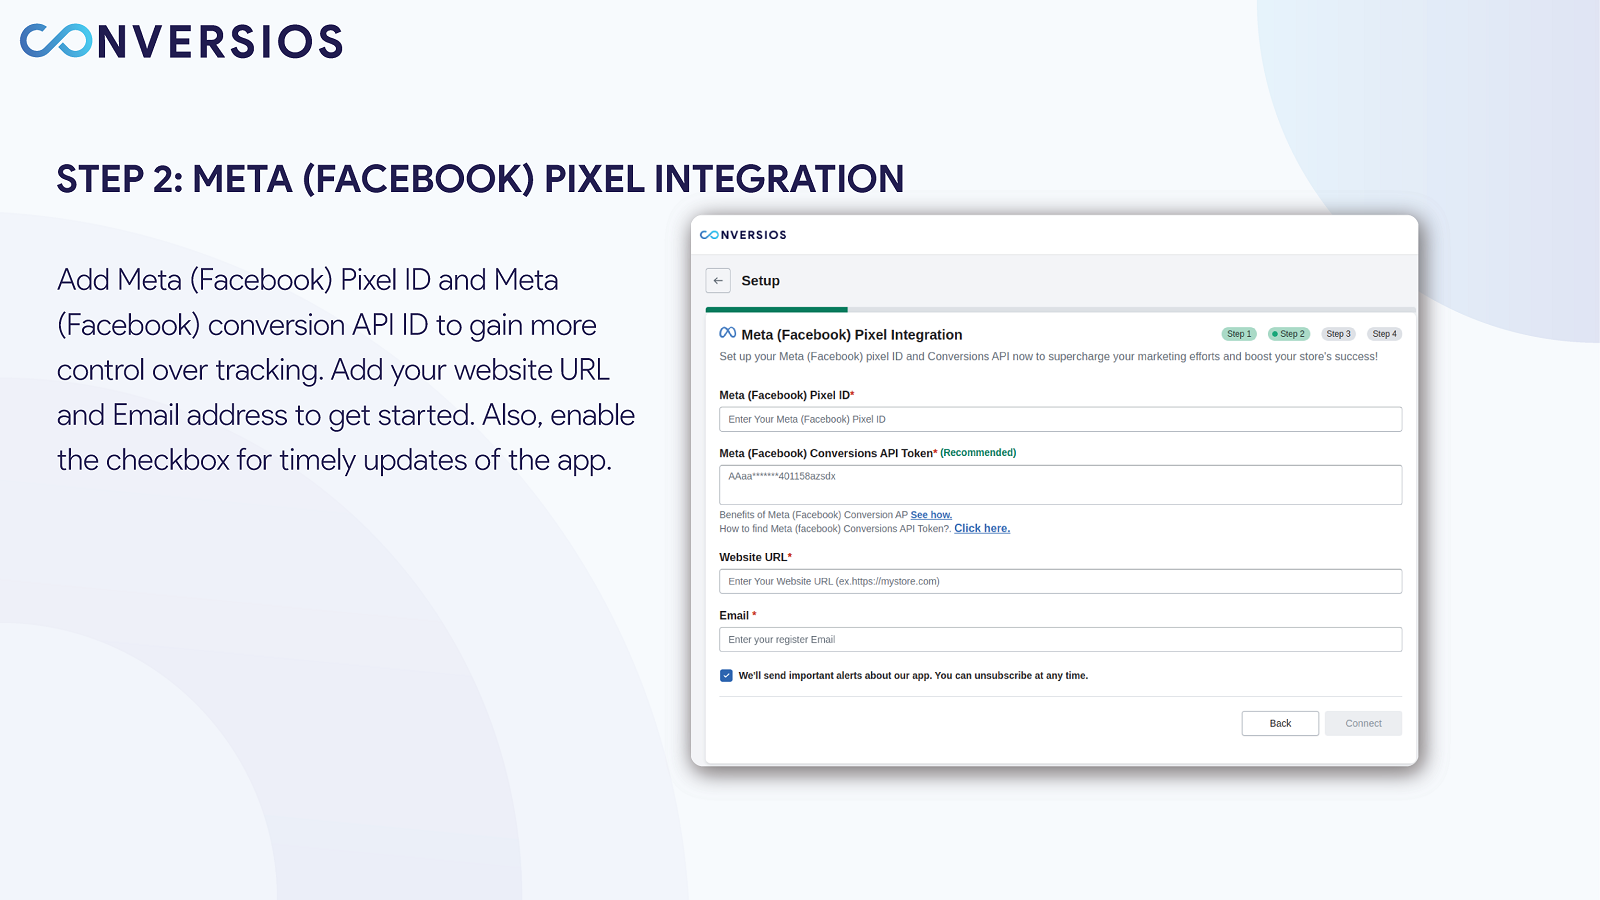 Conversios Meta - Facebook Pixel & Conversions API app settings.